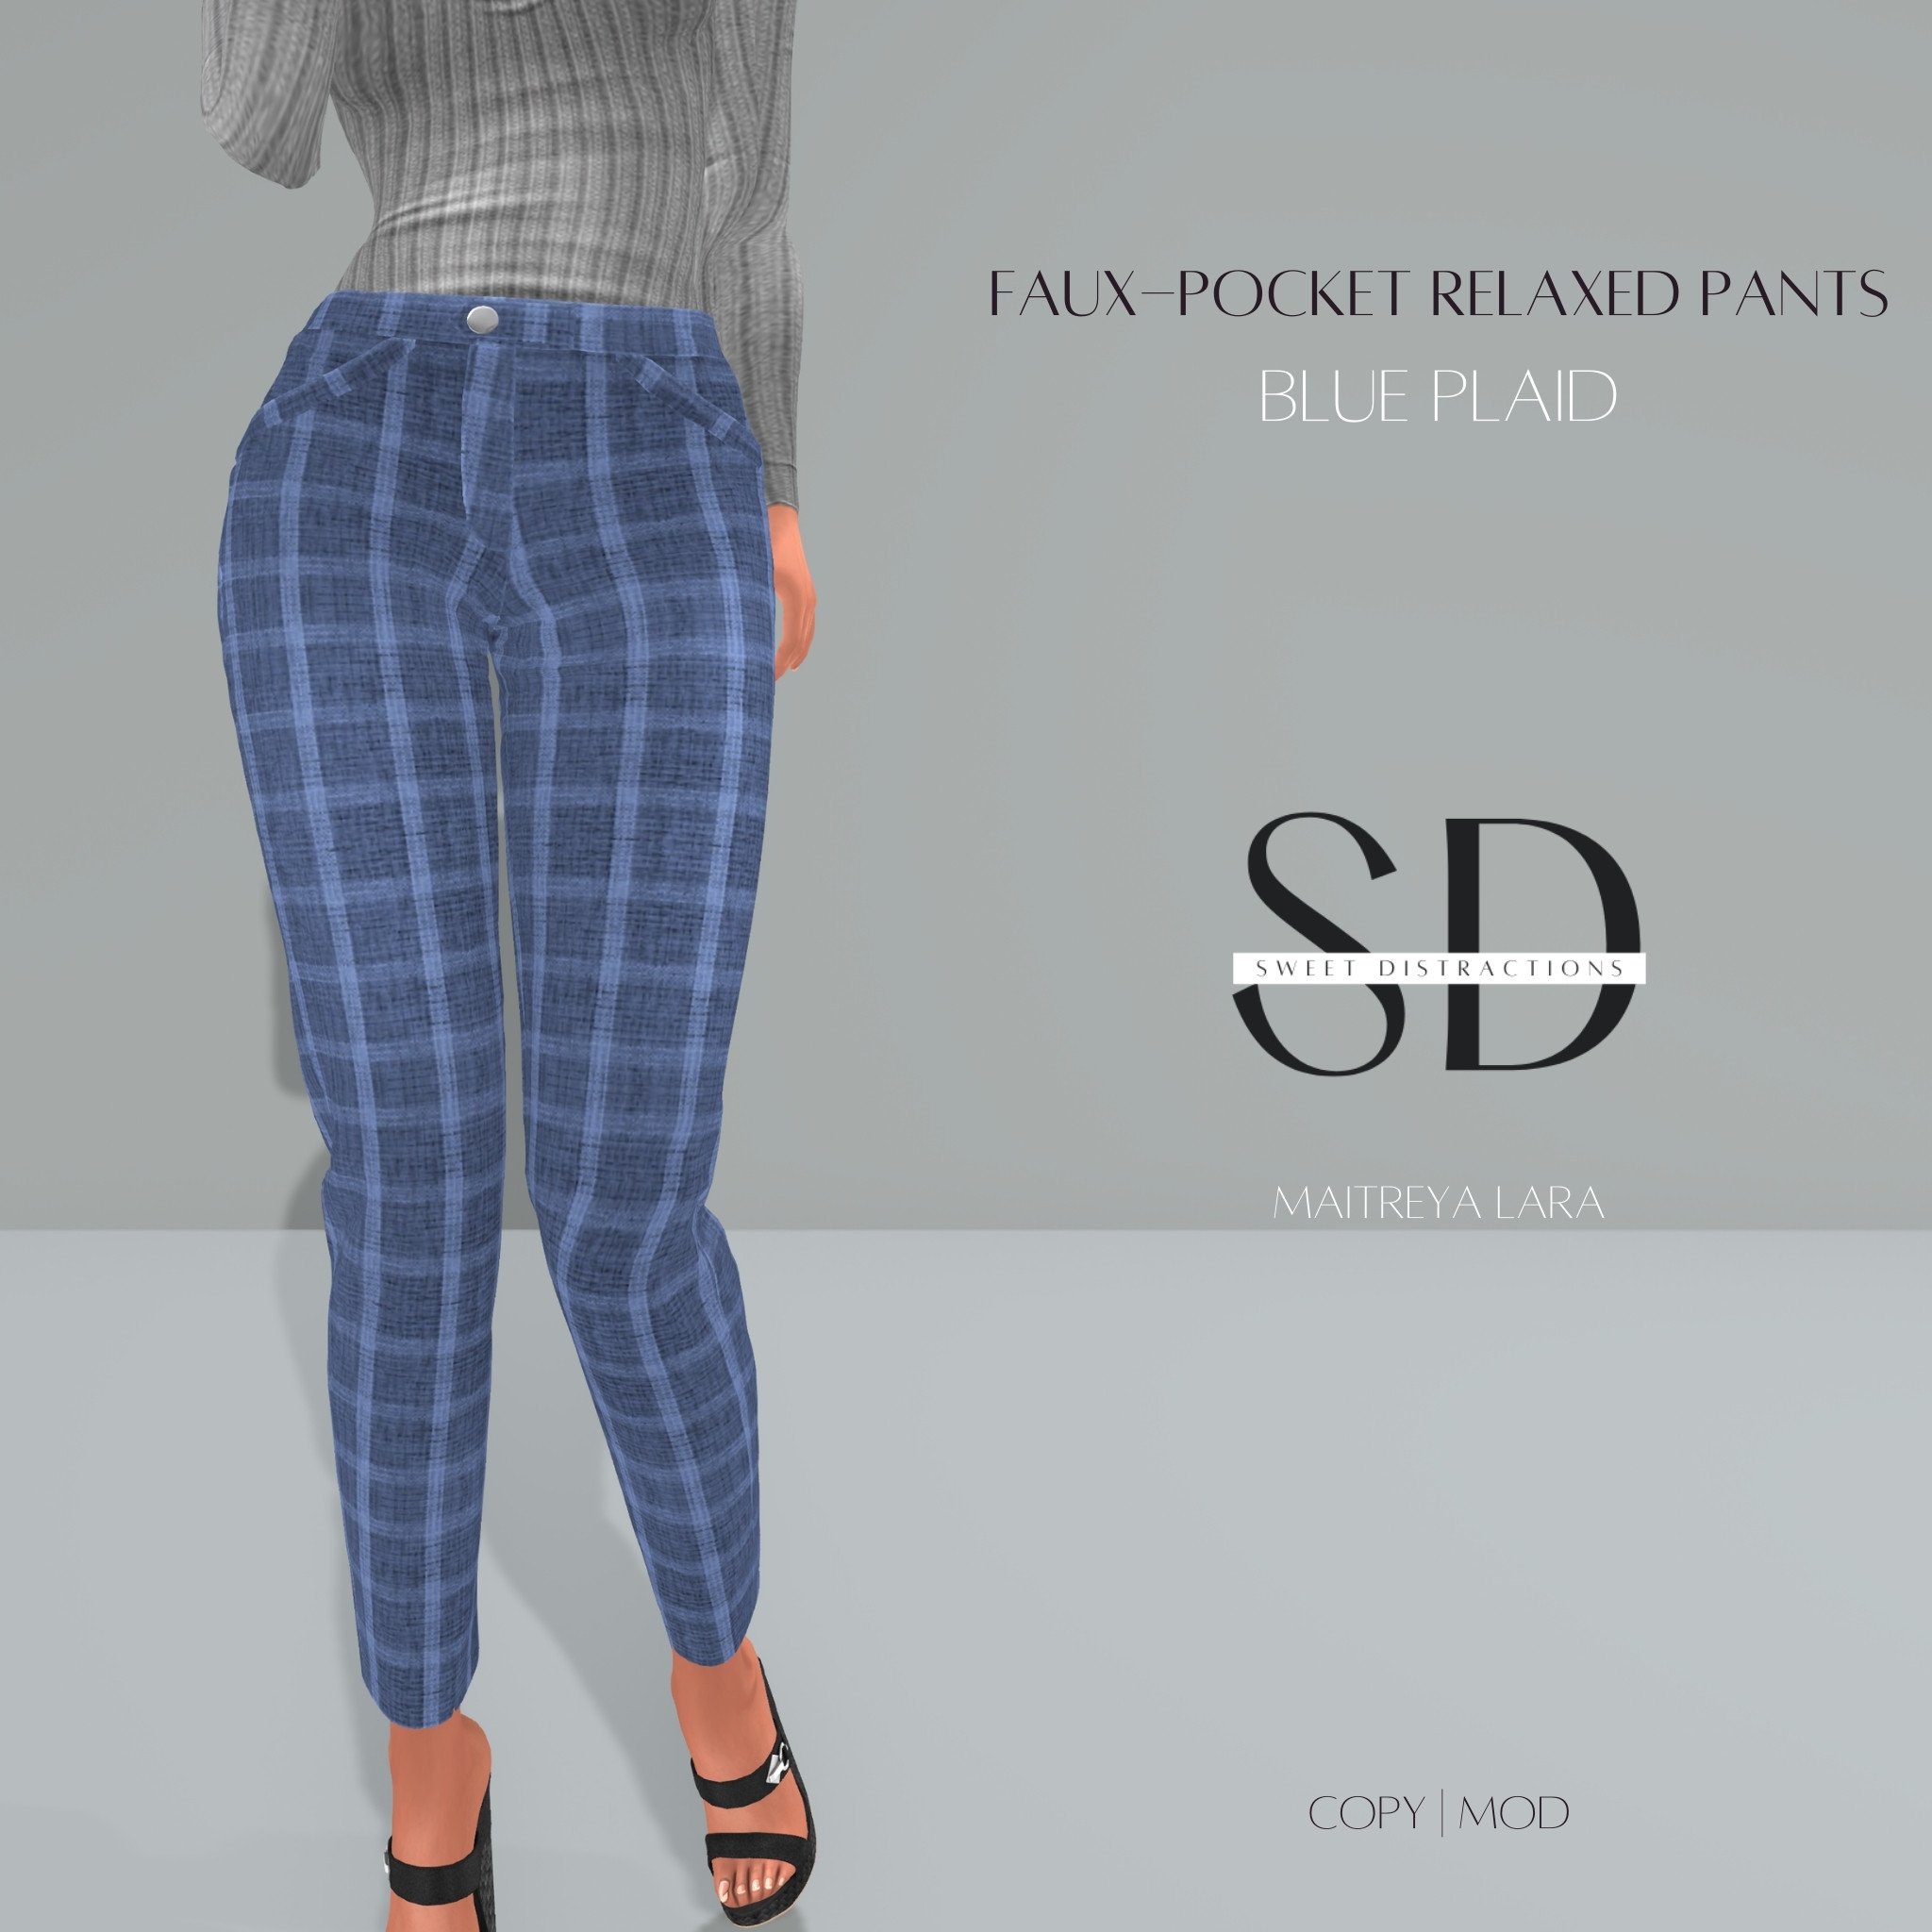 Faux-pocket Relaxed Pants - Blue Plaid_SL Vendor Pic.jpg